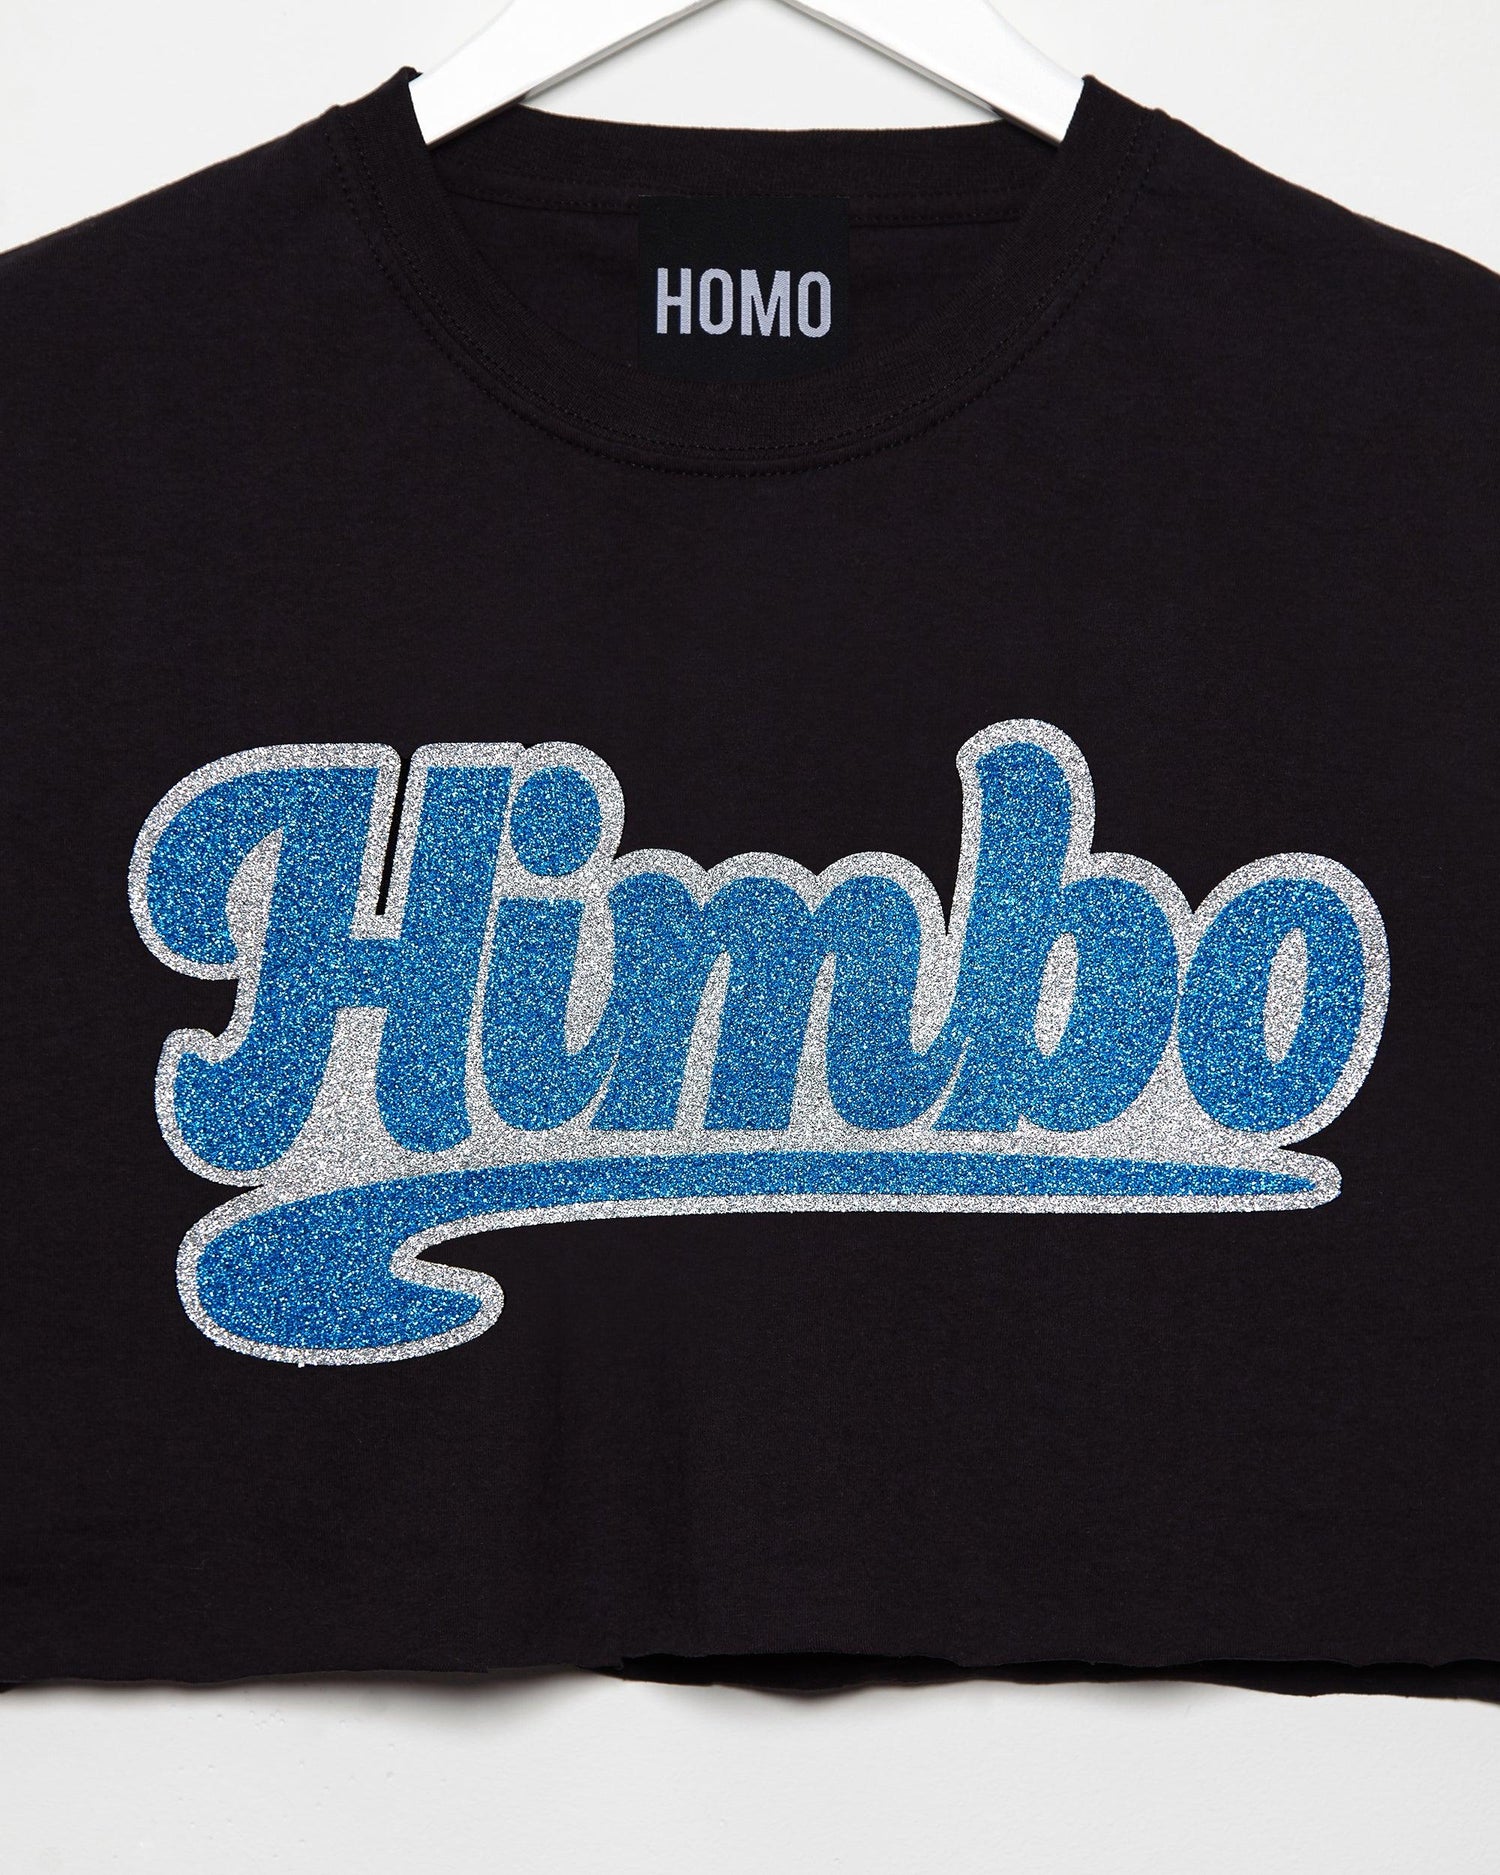 Himbo, blue/silver glitter on black - mens sleeveless crop top. - HOMOLONDON